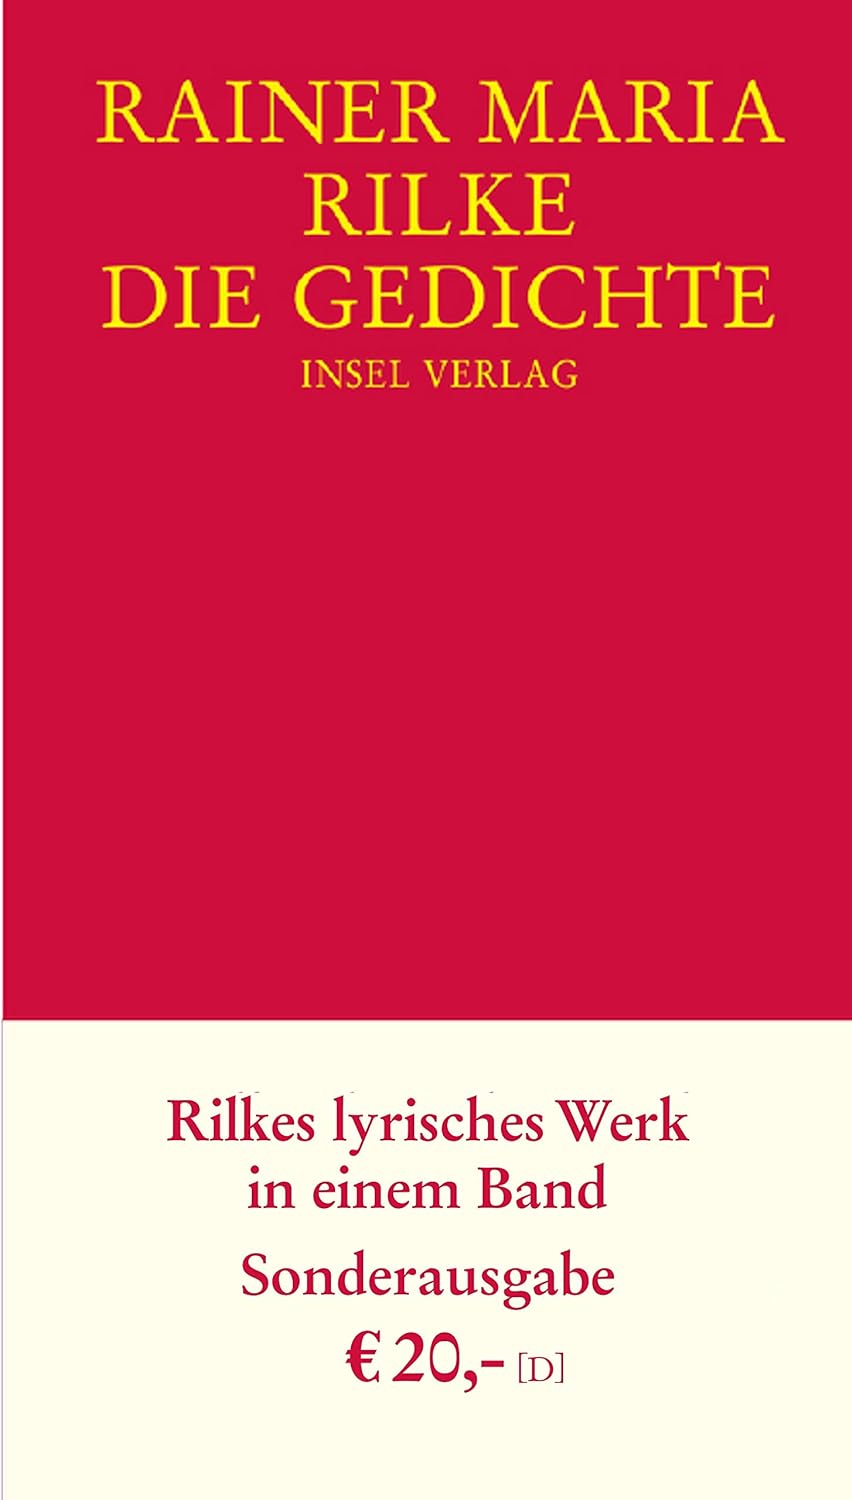 Rainer Maria Rilke: Die Gedichte (German language, 2006, Insel Verlag)